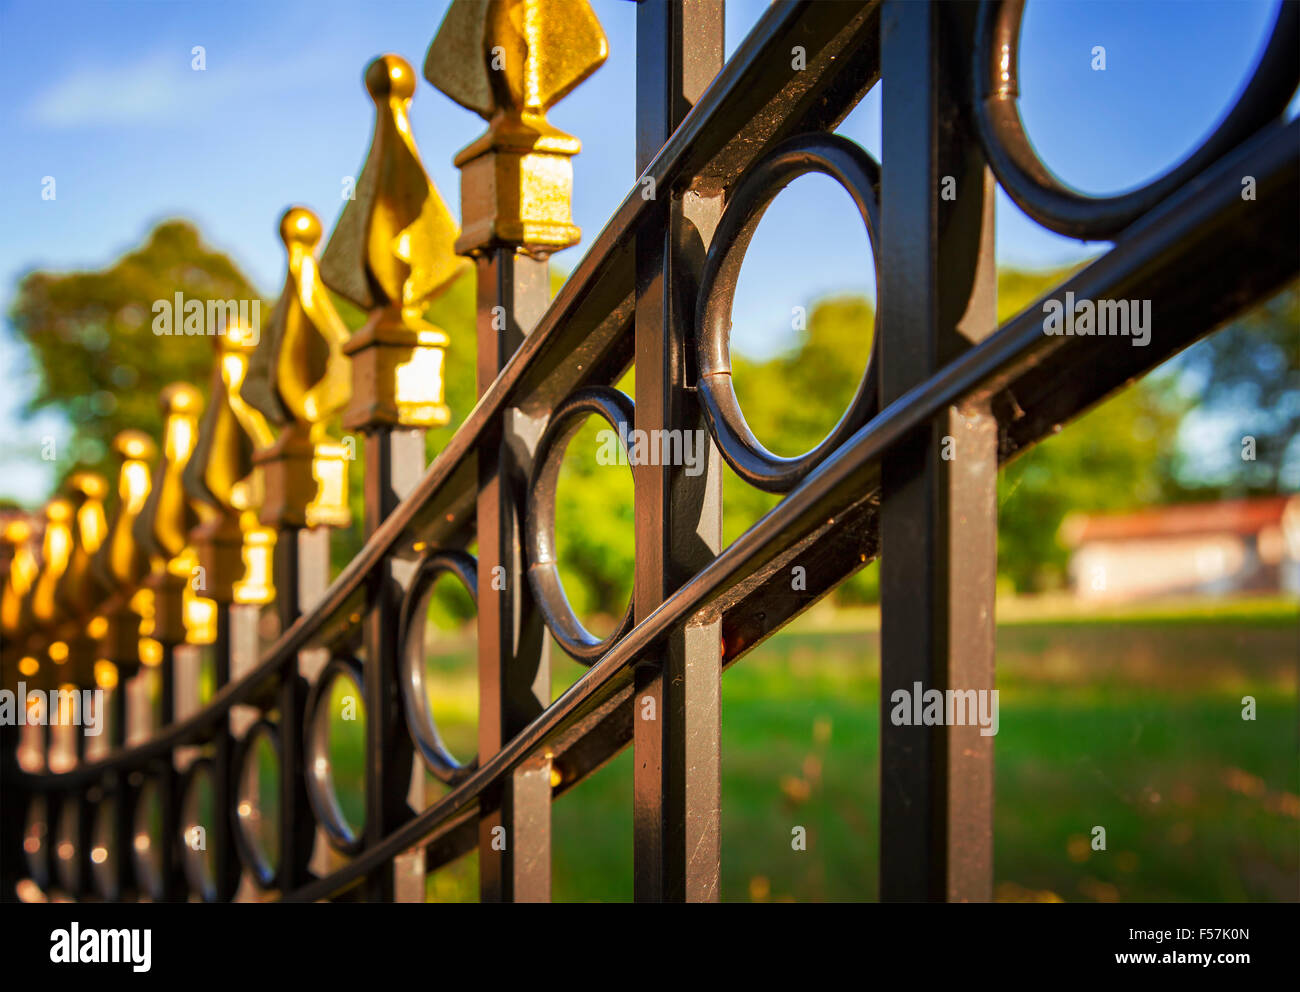 Image of a decorative cast iron fence. Stock Photo